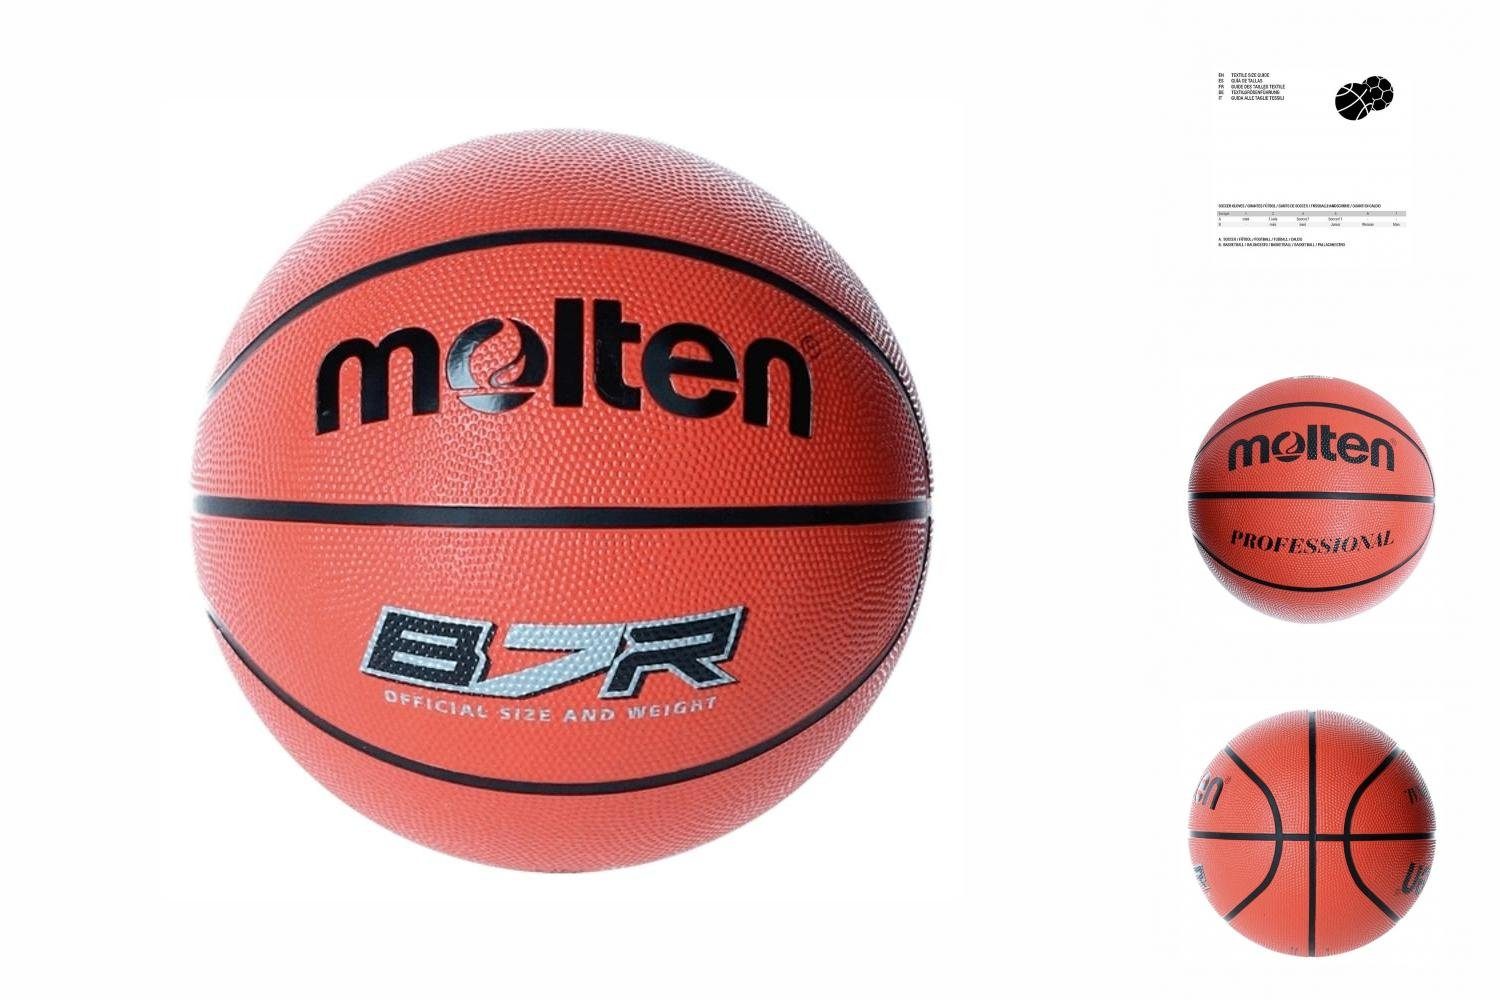 Molten Basketball Basketball Molten B7R2 Braun Einheitsgröße